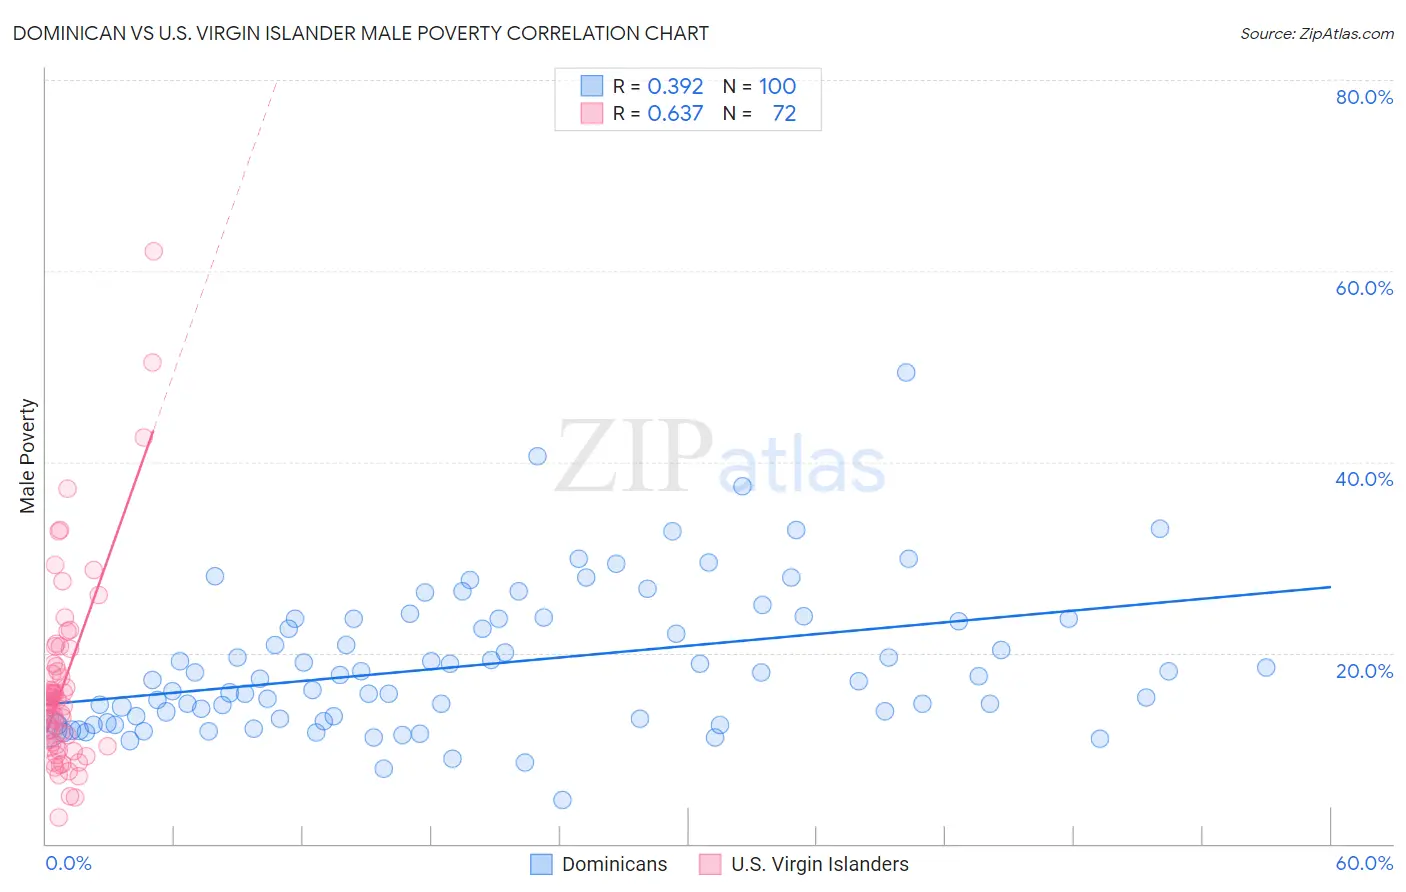 Dominican vs U.S. Virgin Islander Male Poverty